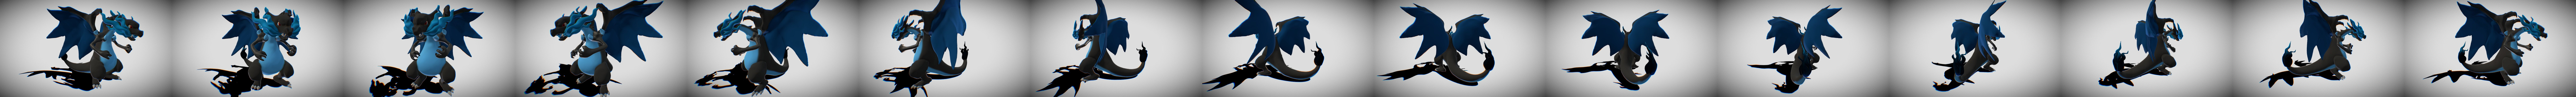 Mega Charizard X - Download Free 3D model by Mustrik (@Mustrik